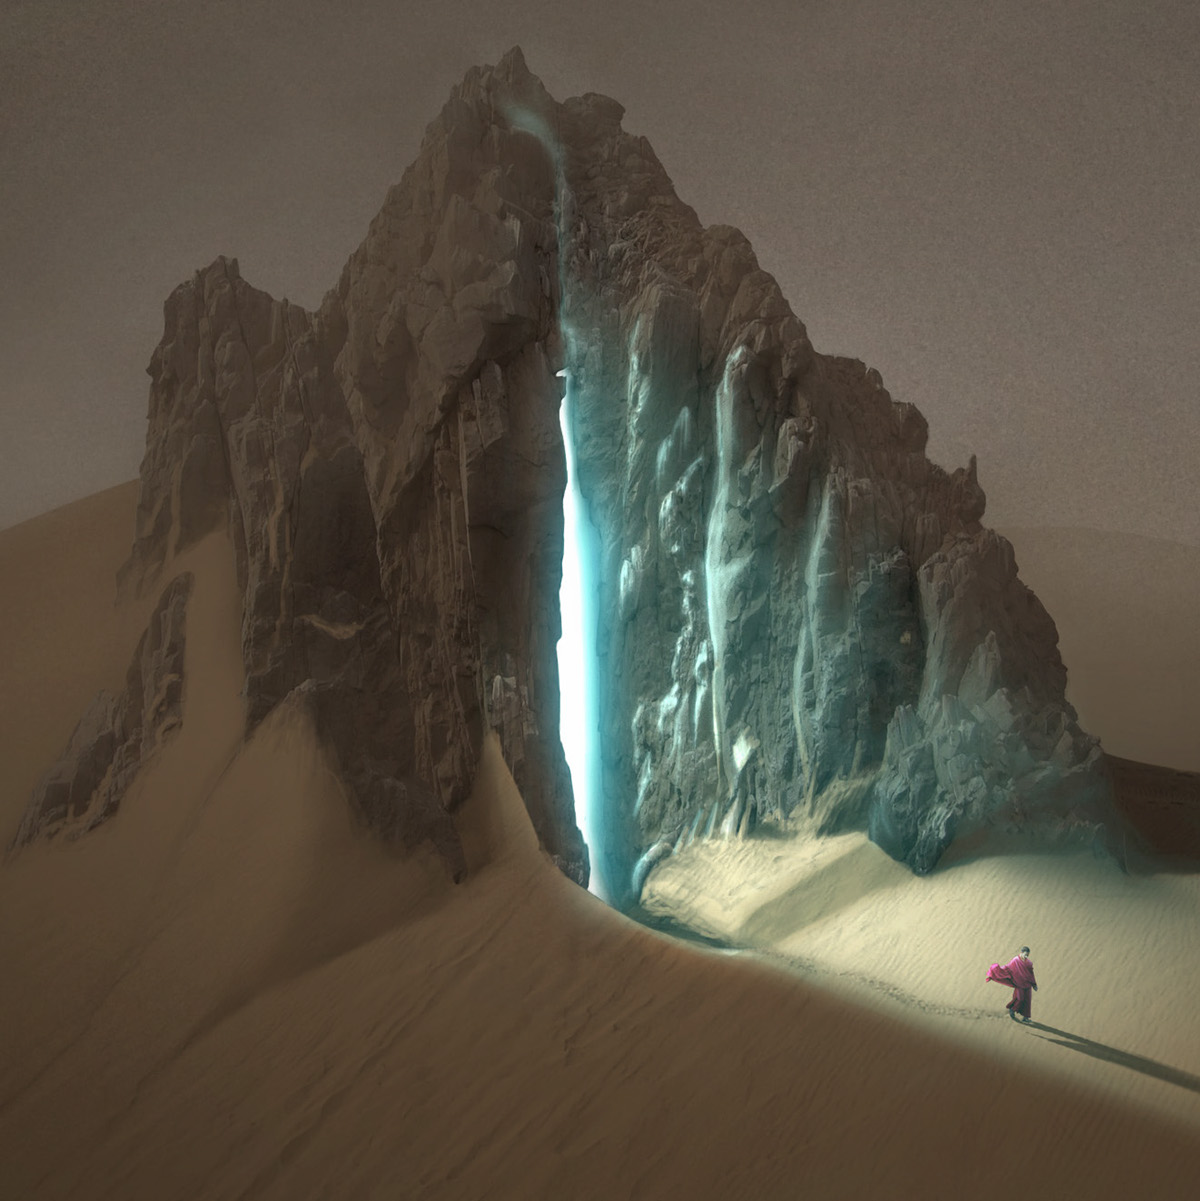 Adobe Portfolio giuseppe parisi Matte Painting Composite desert man alone lonely lone solitary mountain rock Messiah fantasy surreal portal